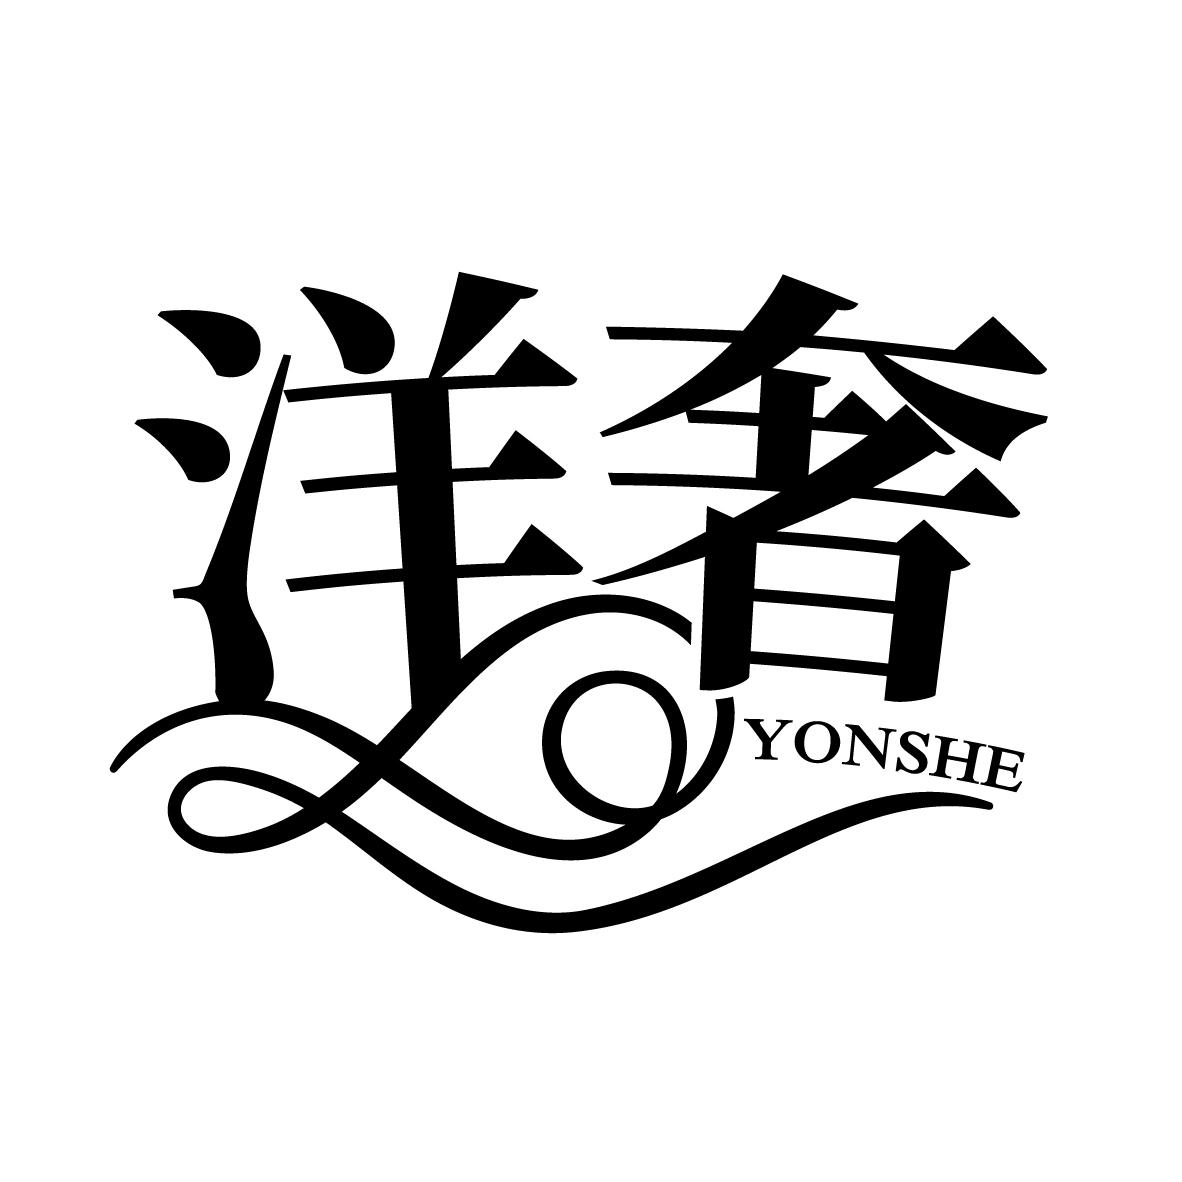  YONSHE